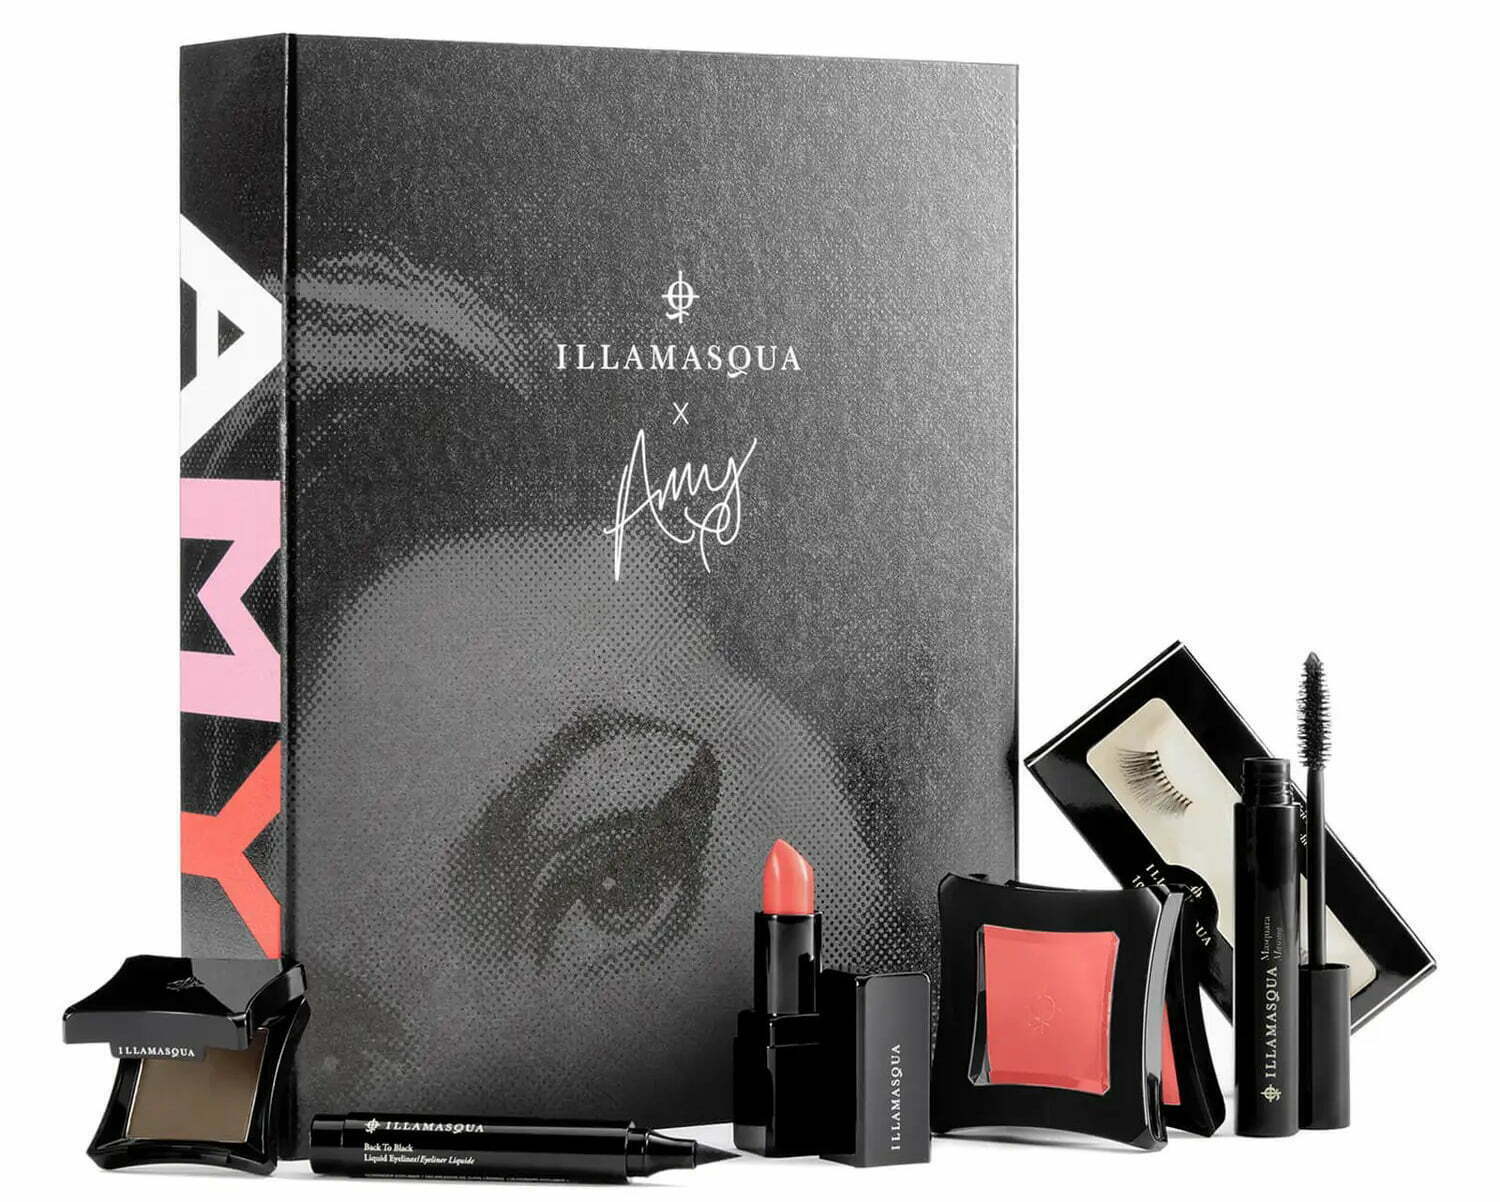 Illamasqua Frankly Amy Limited Edition Beauty Box